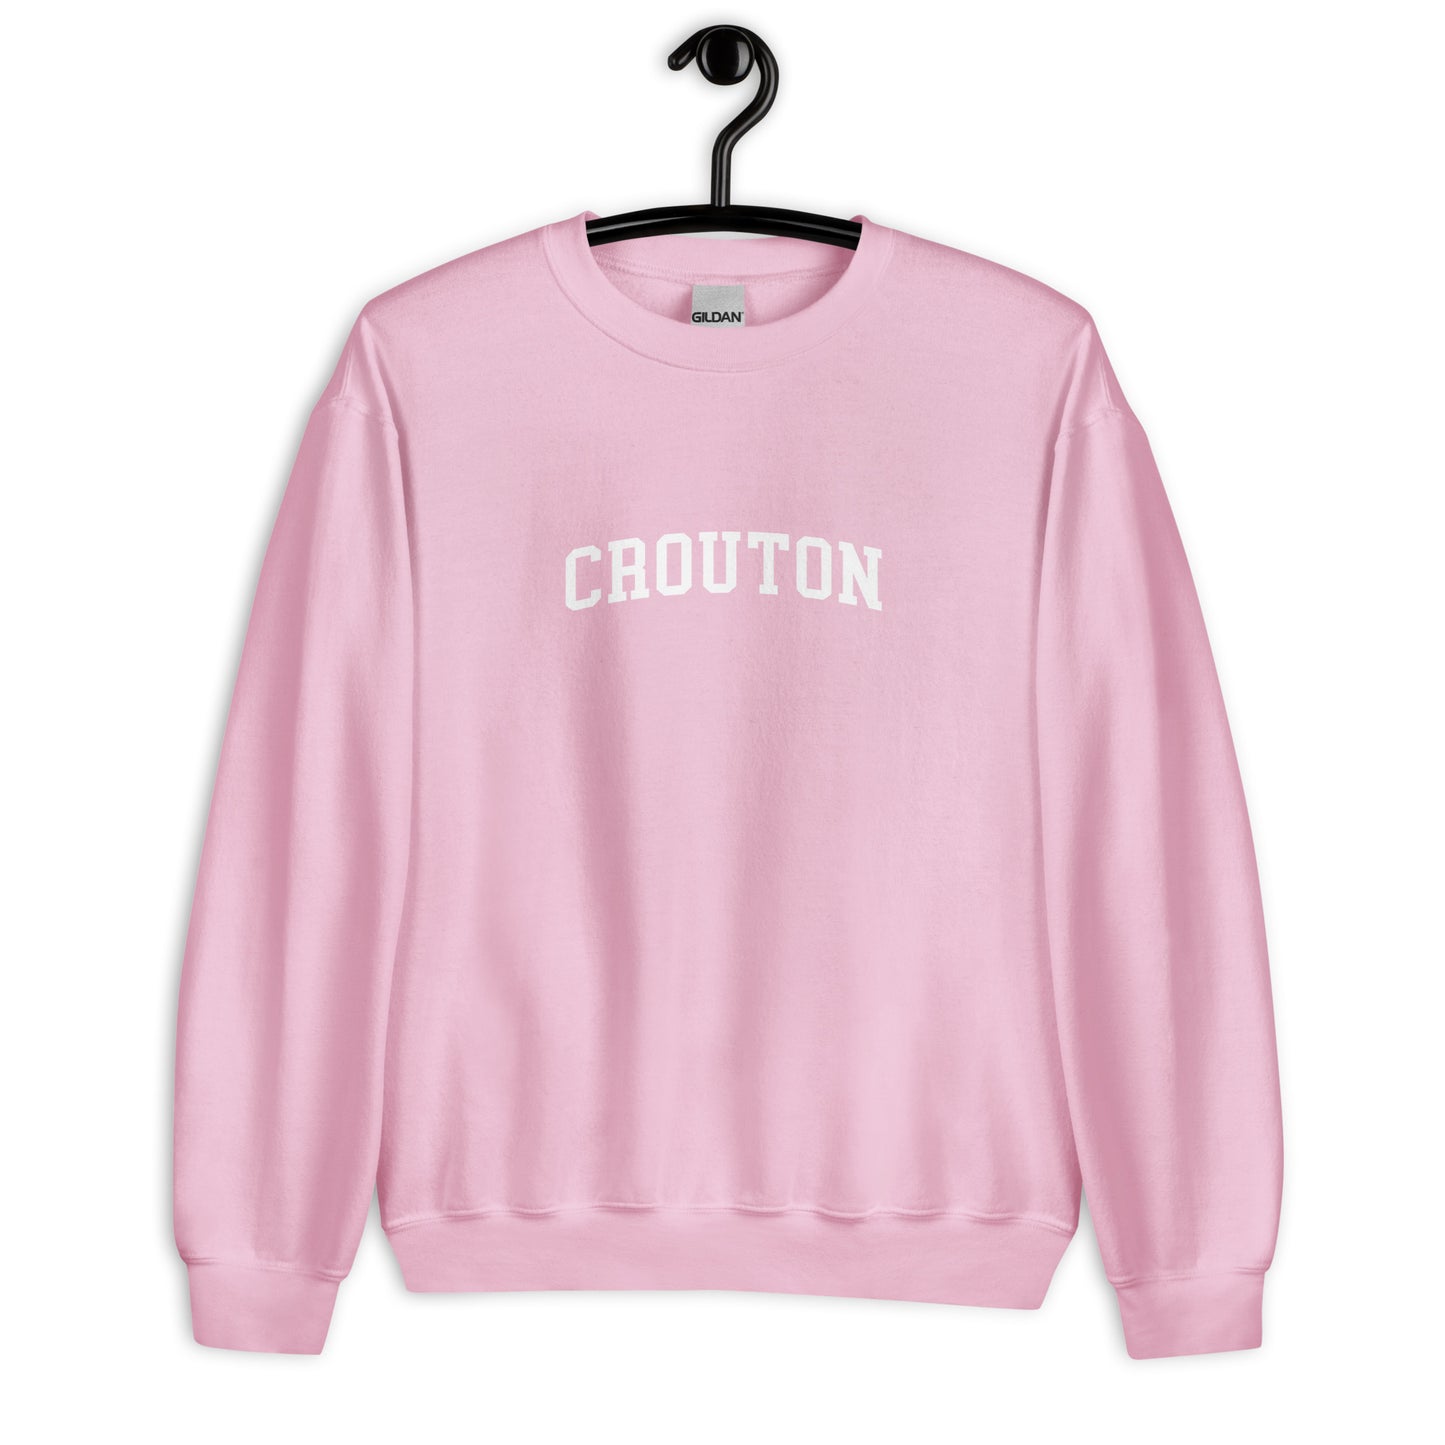 Crouton Sweatshirt - Arched Font